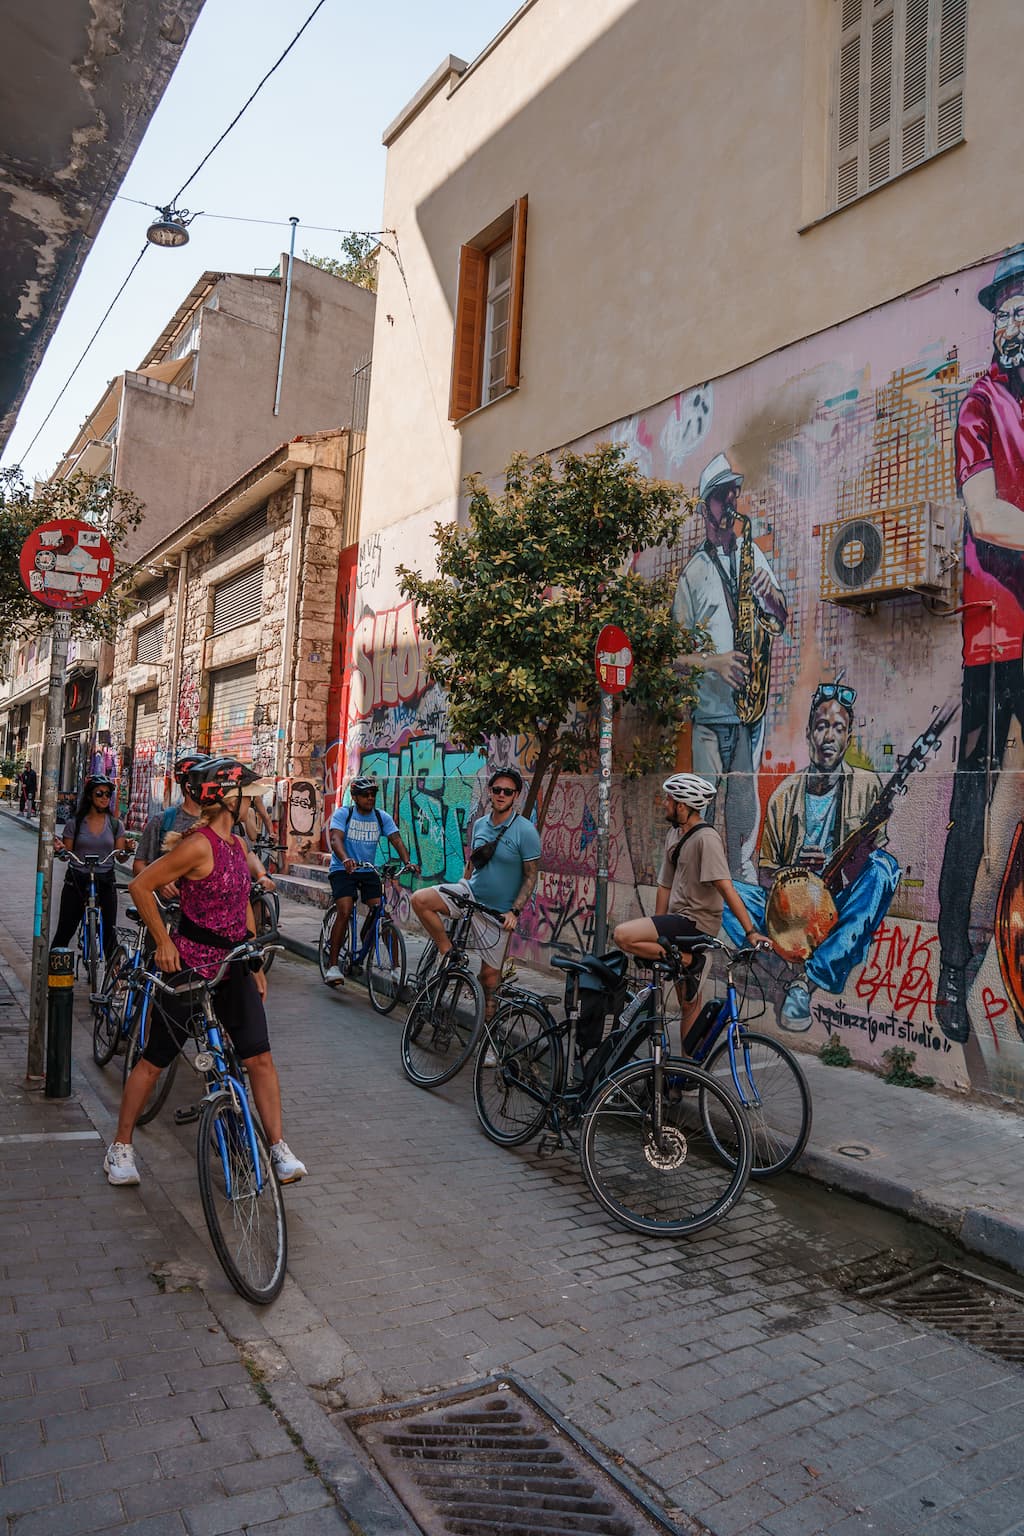 Our Athens Bike Tour took us through the colourful neighbourhood of Psyri. 